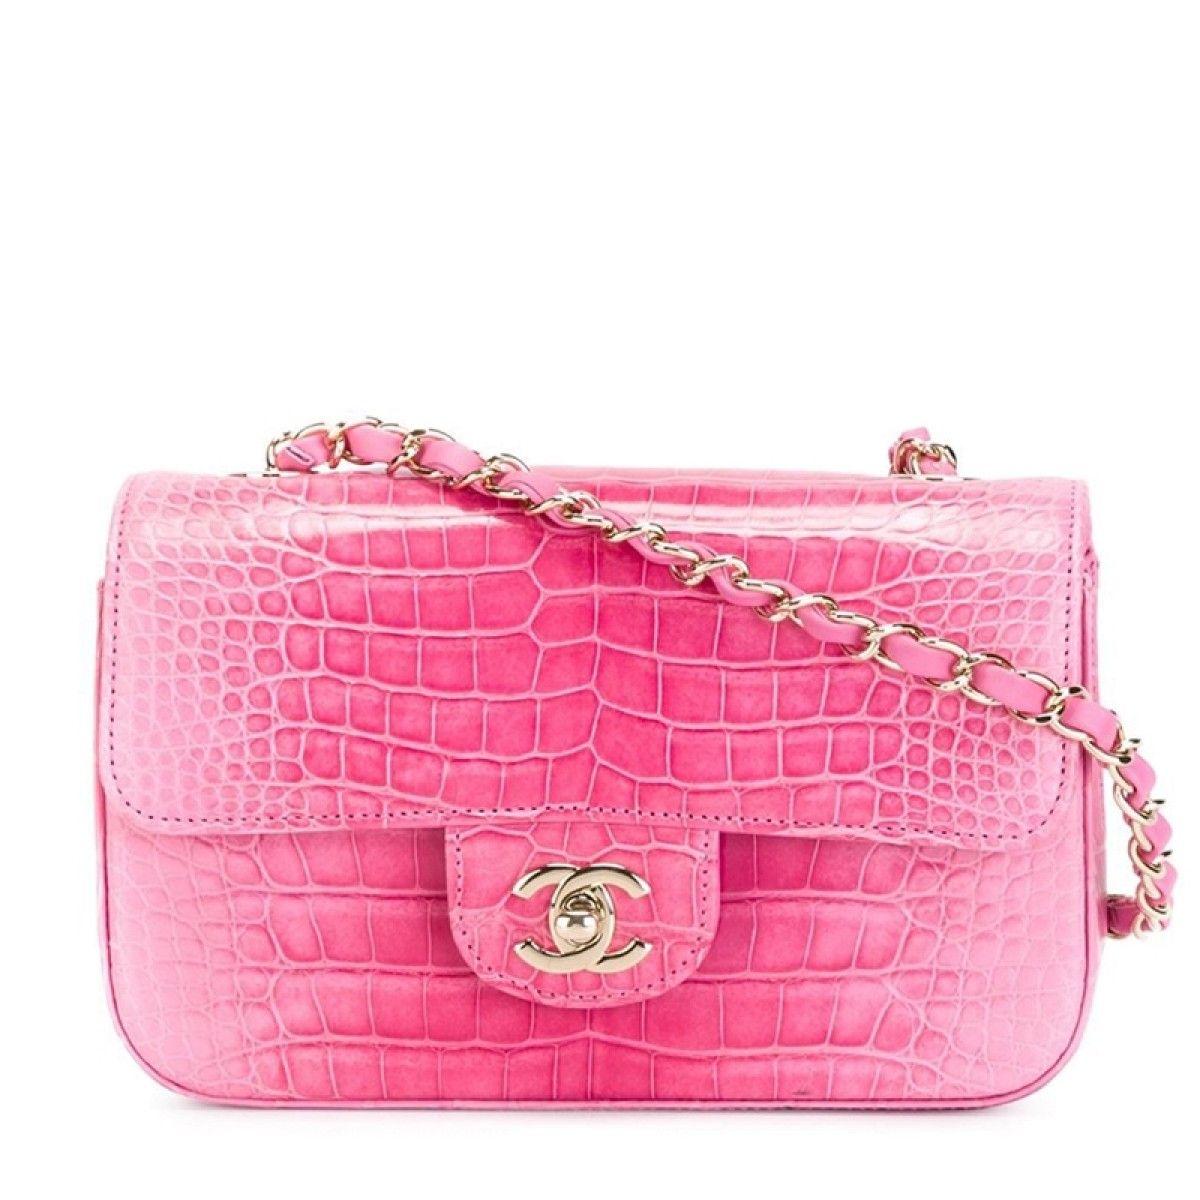 Crocodile with Pink Logo - Chanel Pink Crocodile Classic Flap Bag SOLD